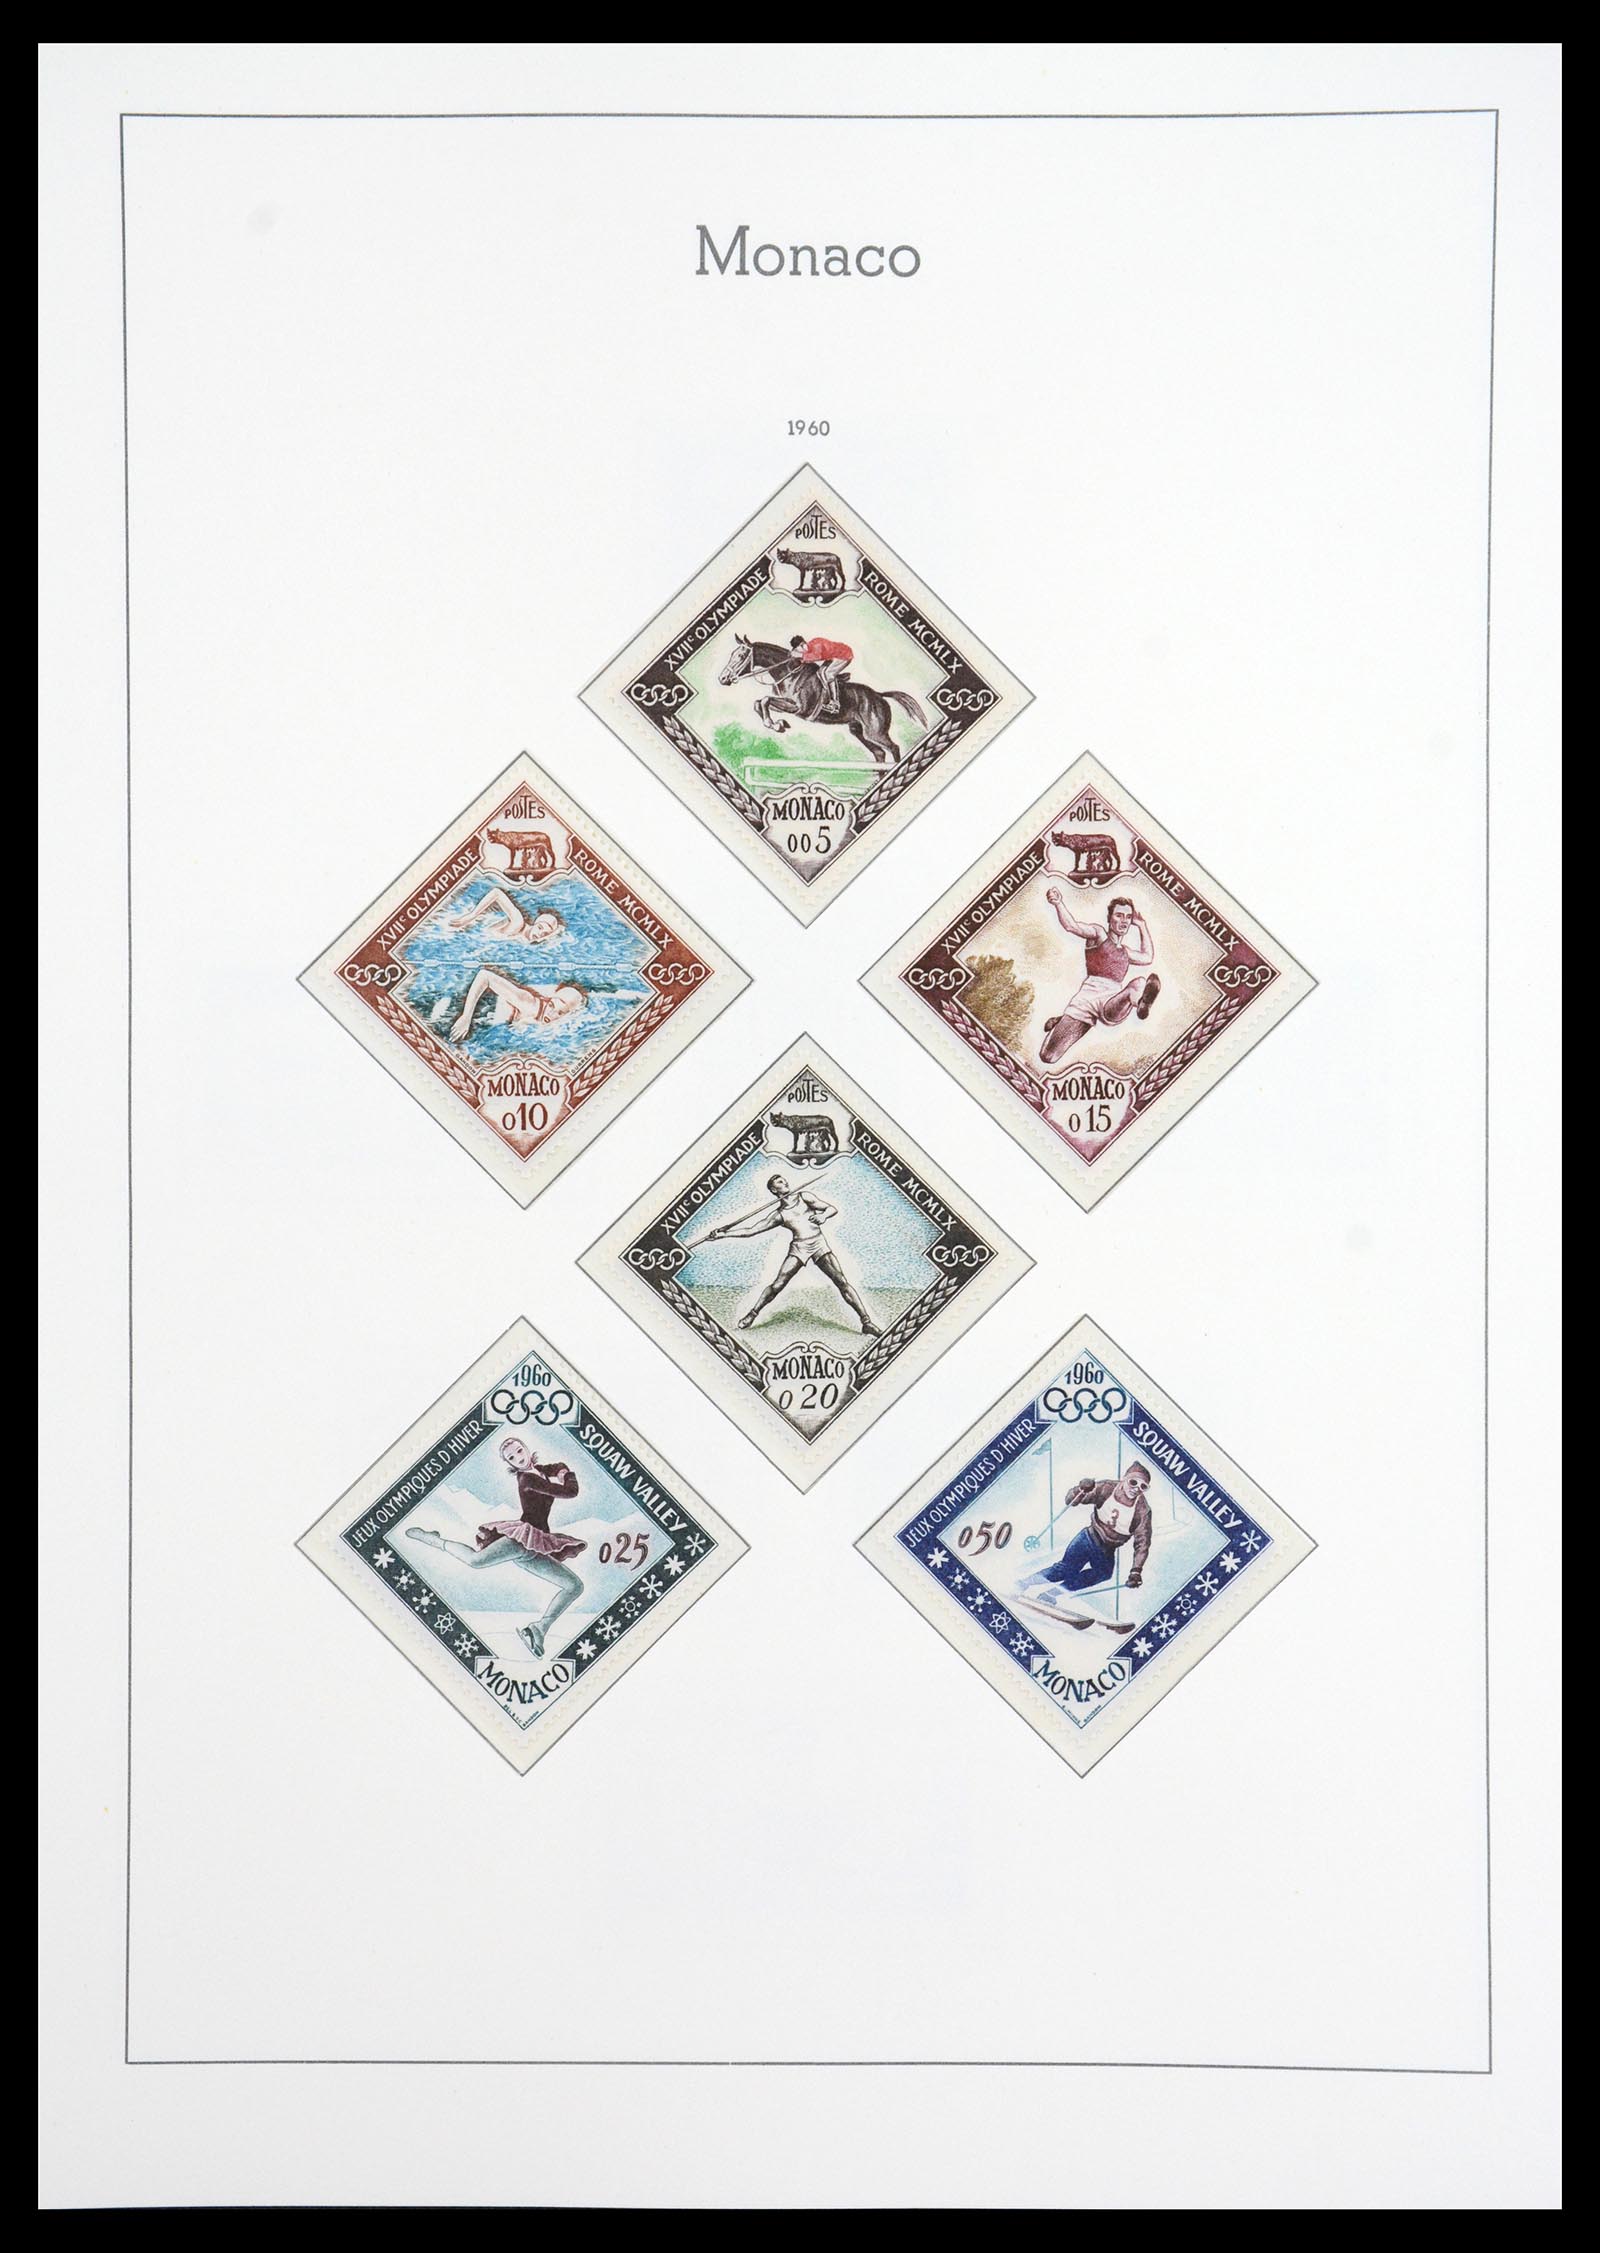 36735 070 - Stamp collection 36735 Monaco 1885-1966.